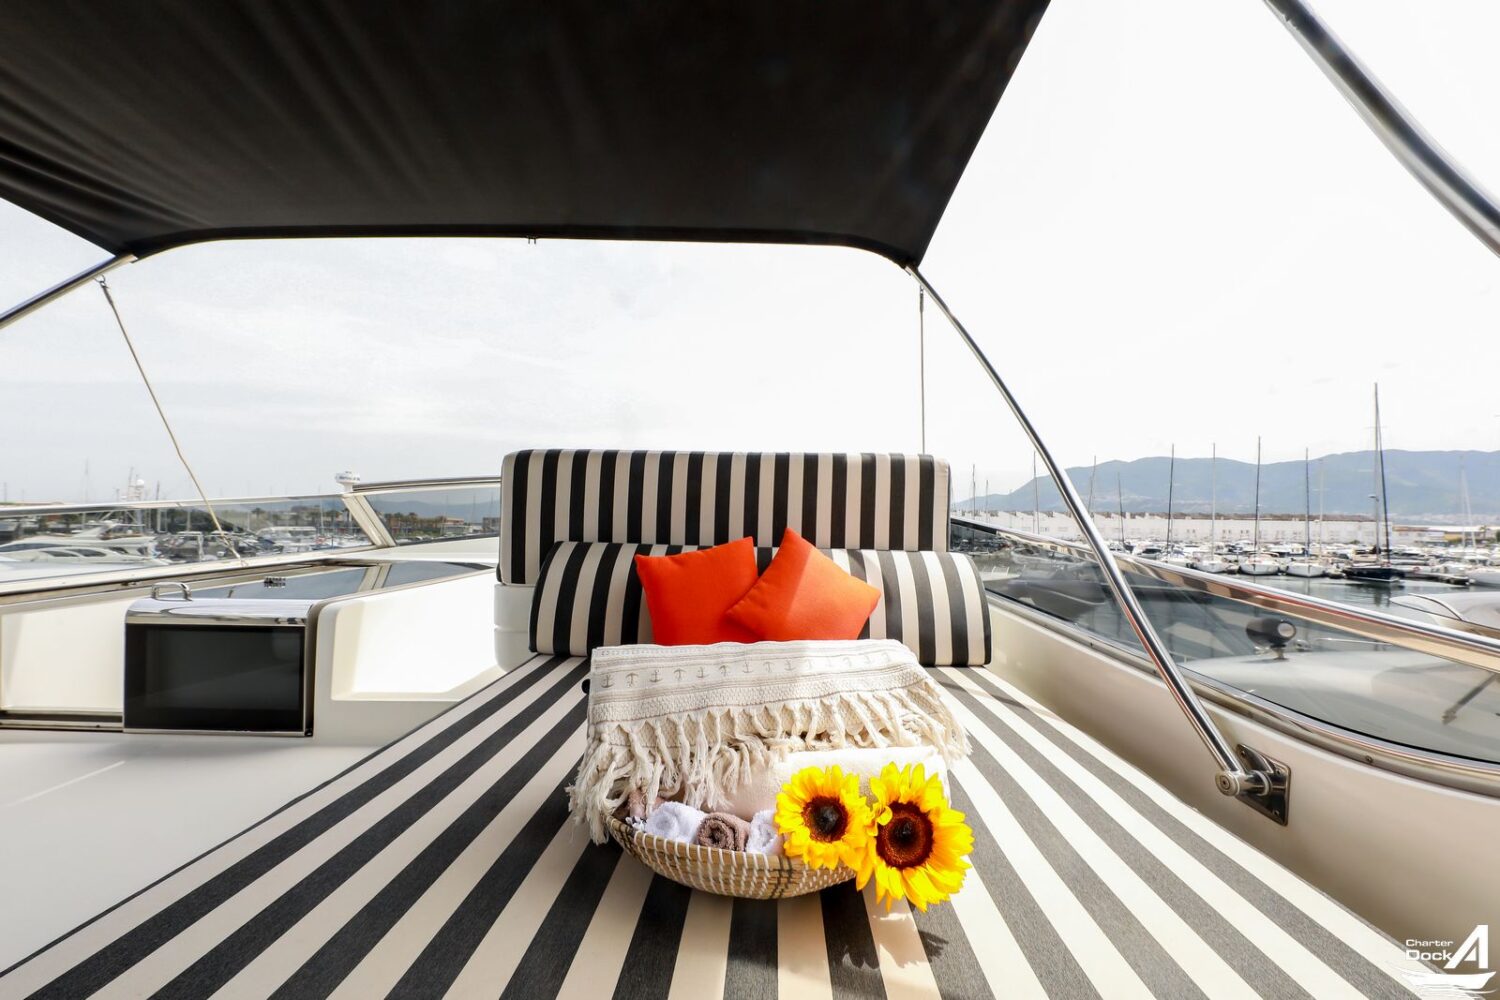 Elegant super yacht cruising against a stunning sunset backdrop."